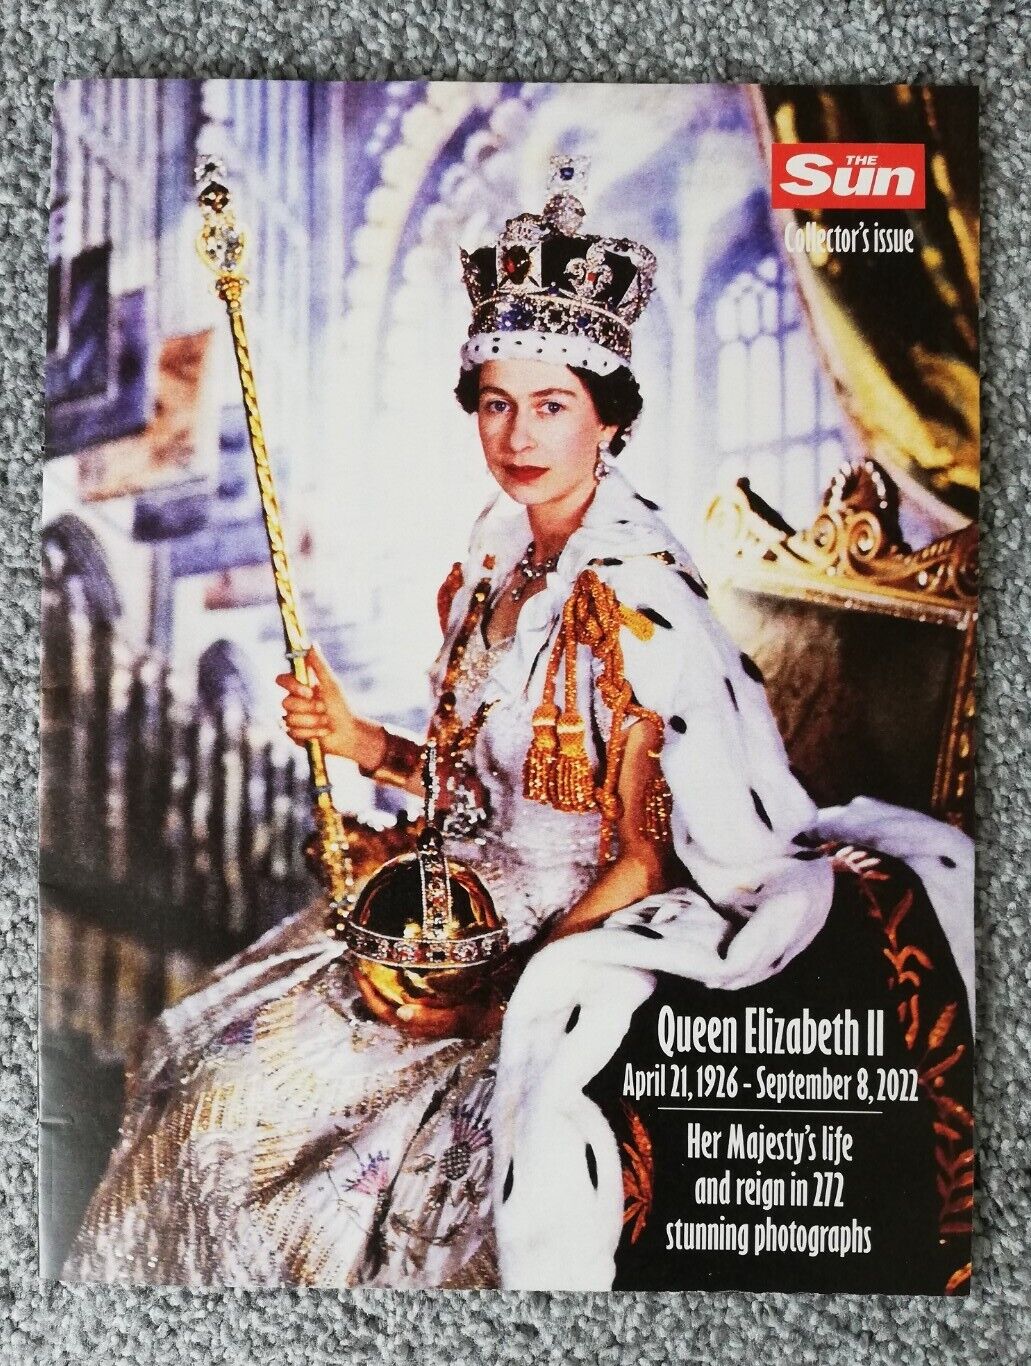 Queen Elizabeth II Death The Sun Magazine 11/09 Stunning Photographs Souvenir